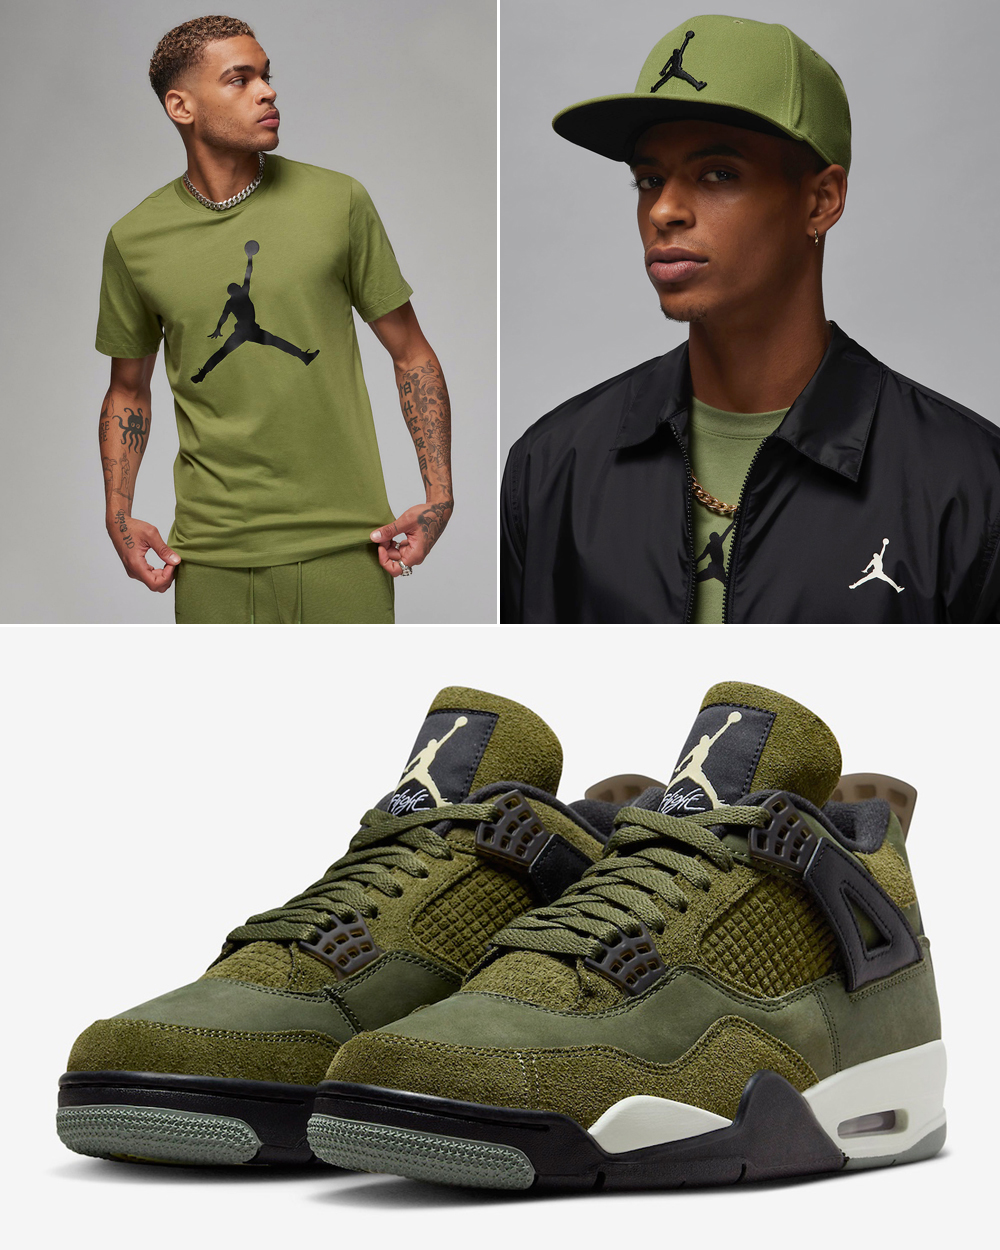 Air-Jordan-4-Craft-Olive-Shirt-Hat-Outfit